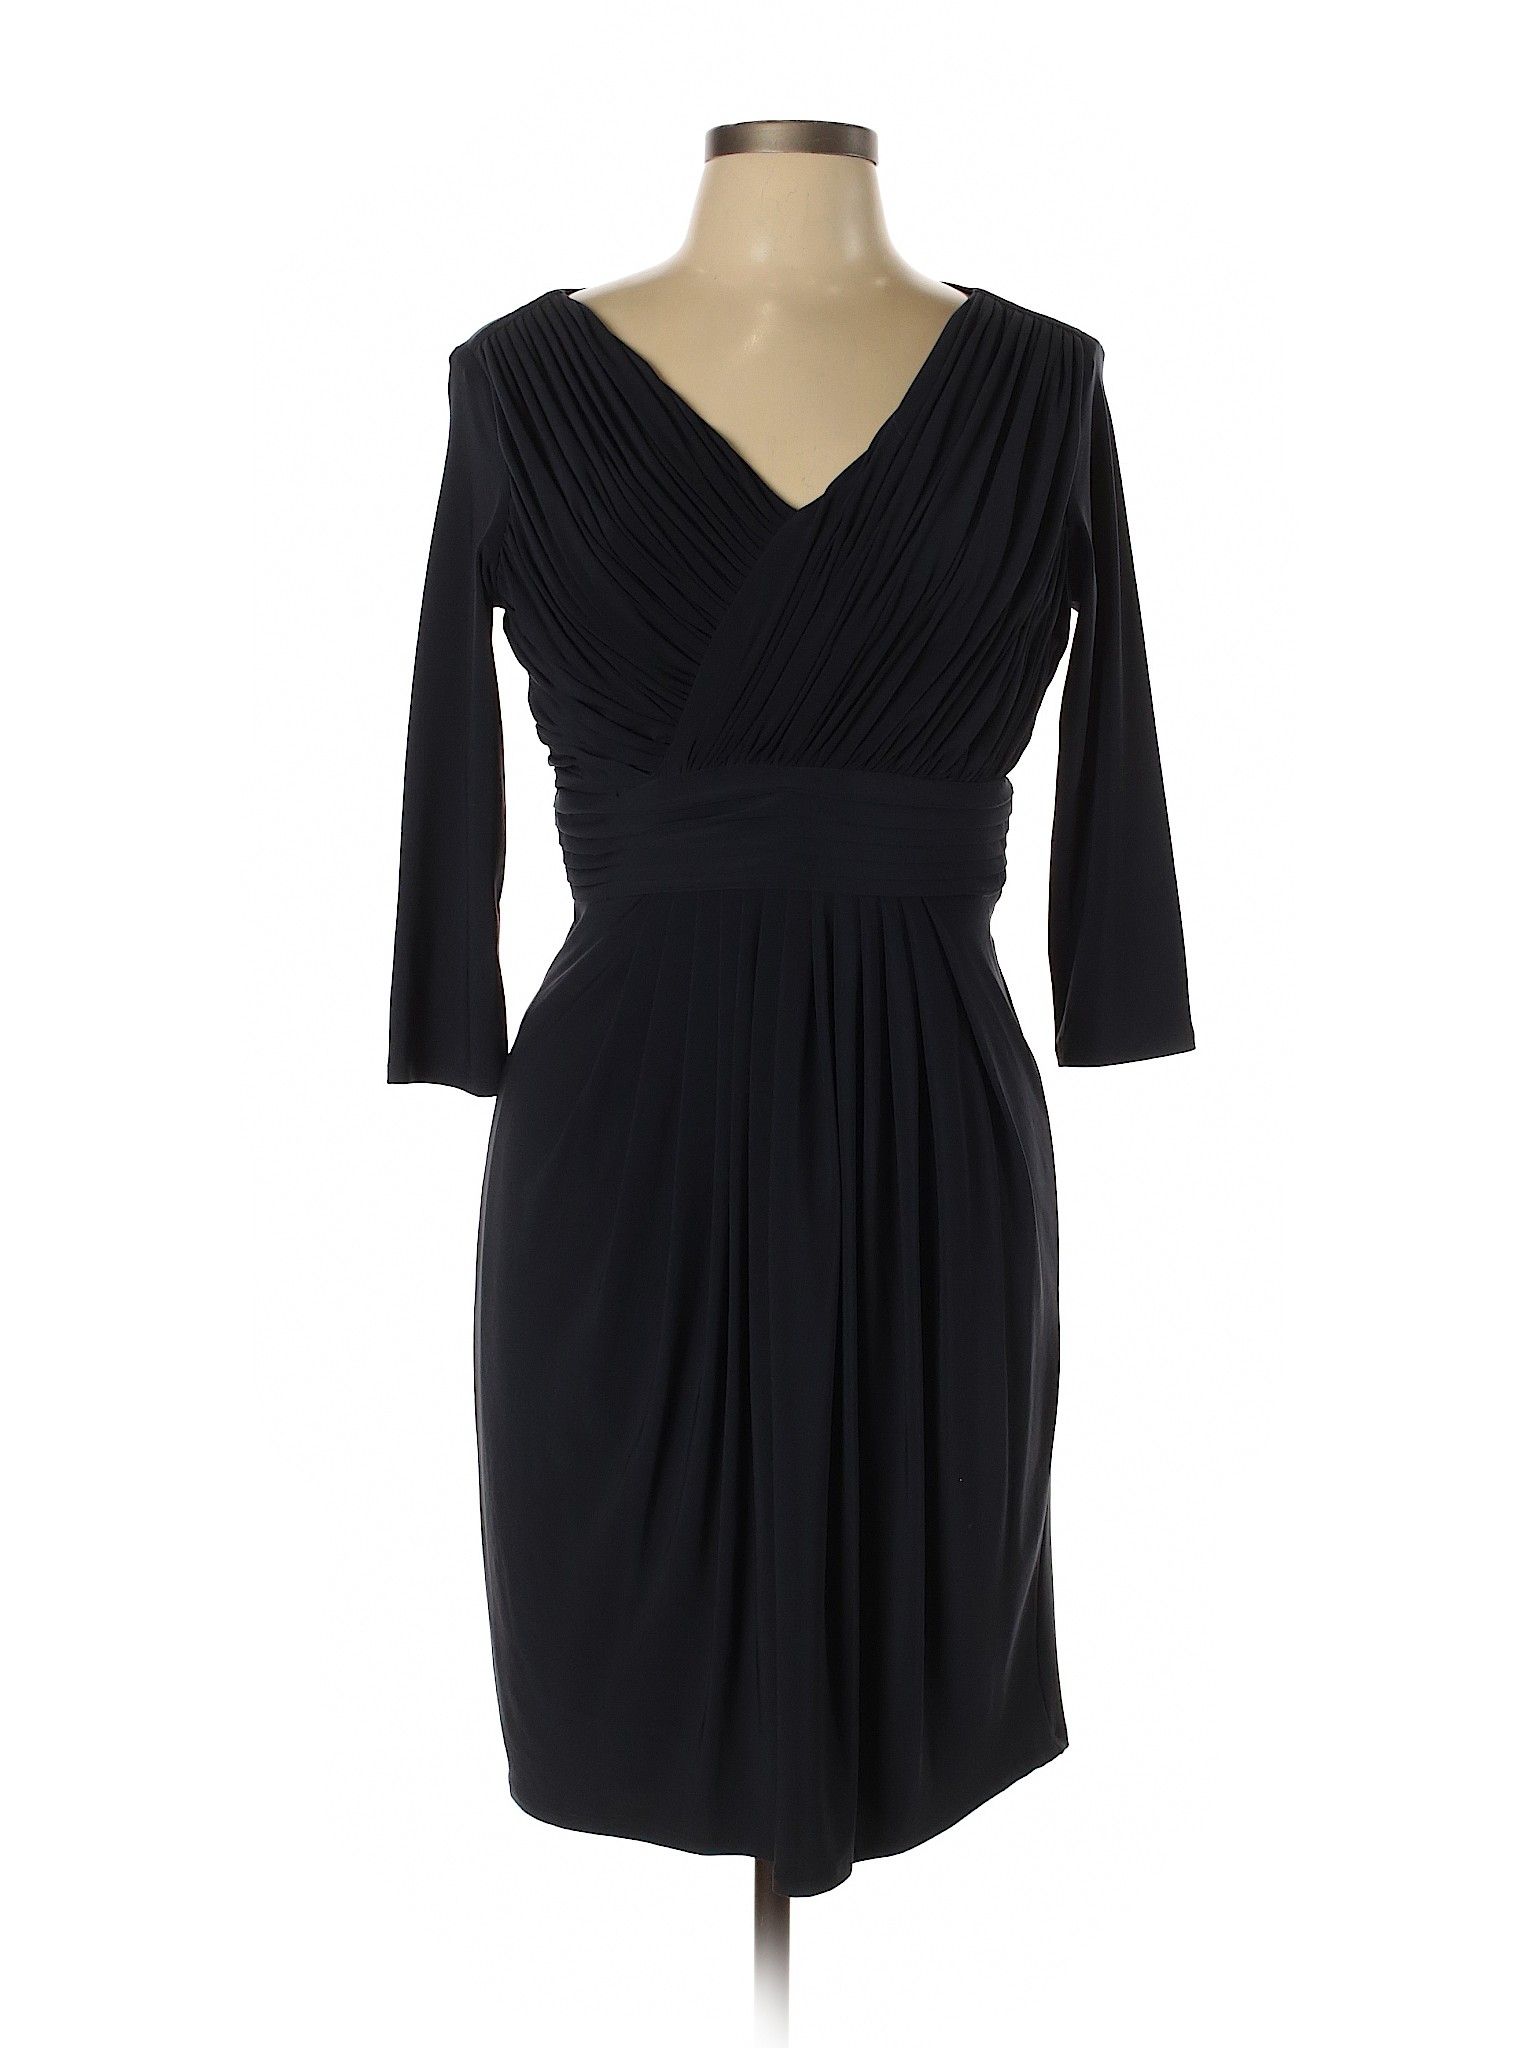 Evan Picone Women Black Cocktail Dress 10 | eBay